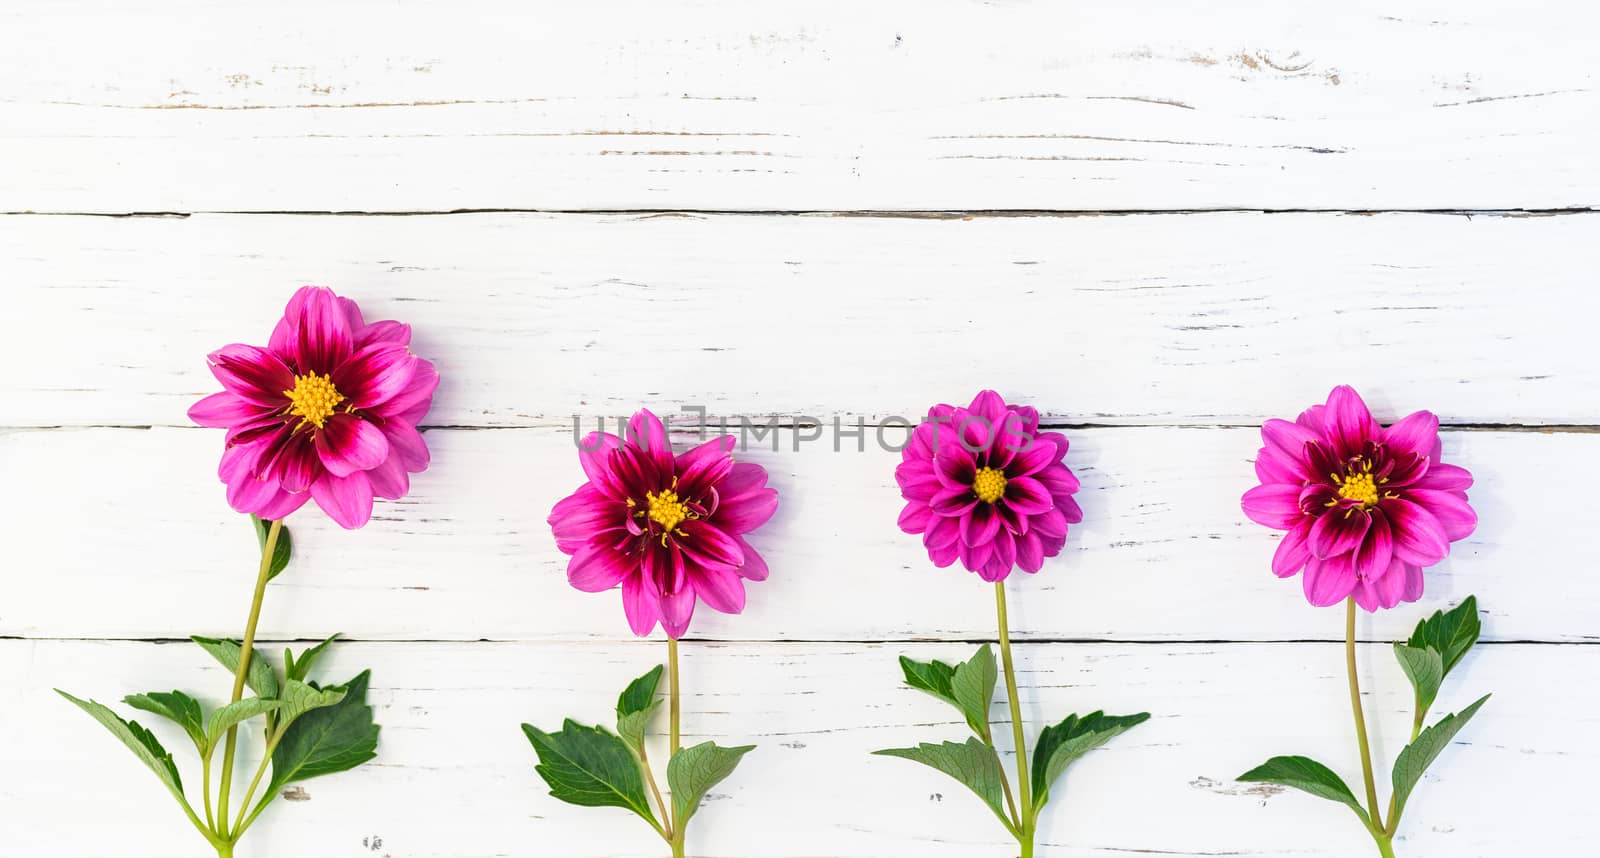 Pink garden flowers over white wooden background by Vulcano